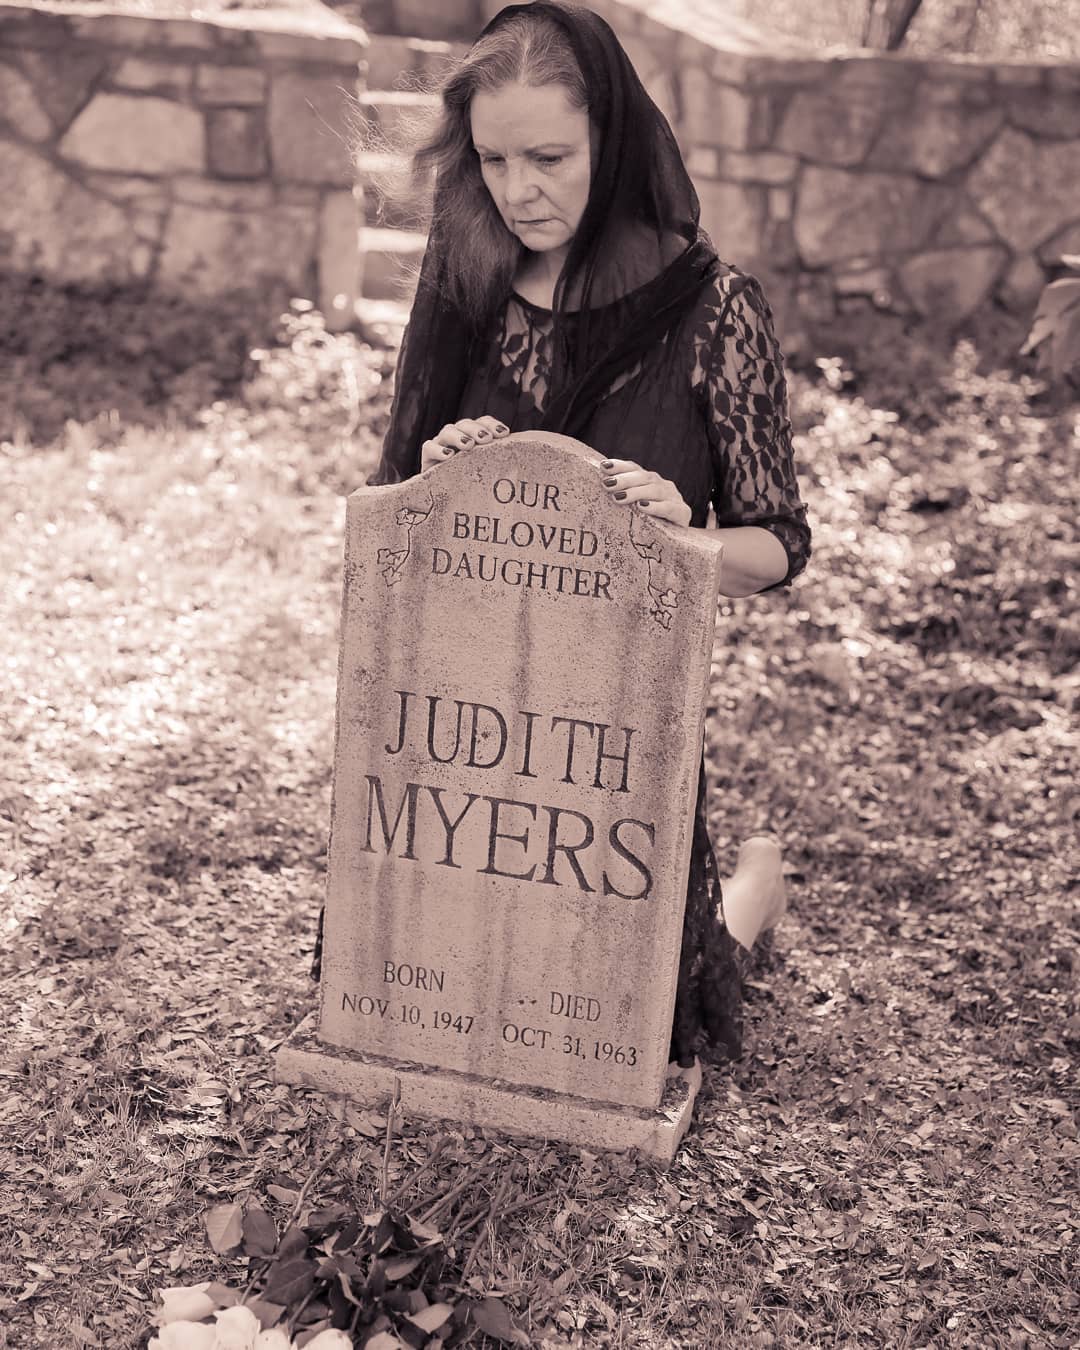 Judith myers actress